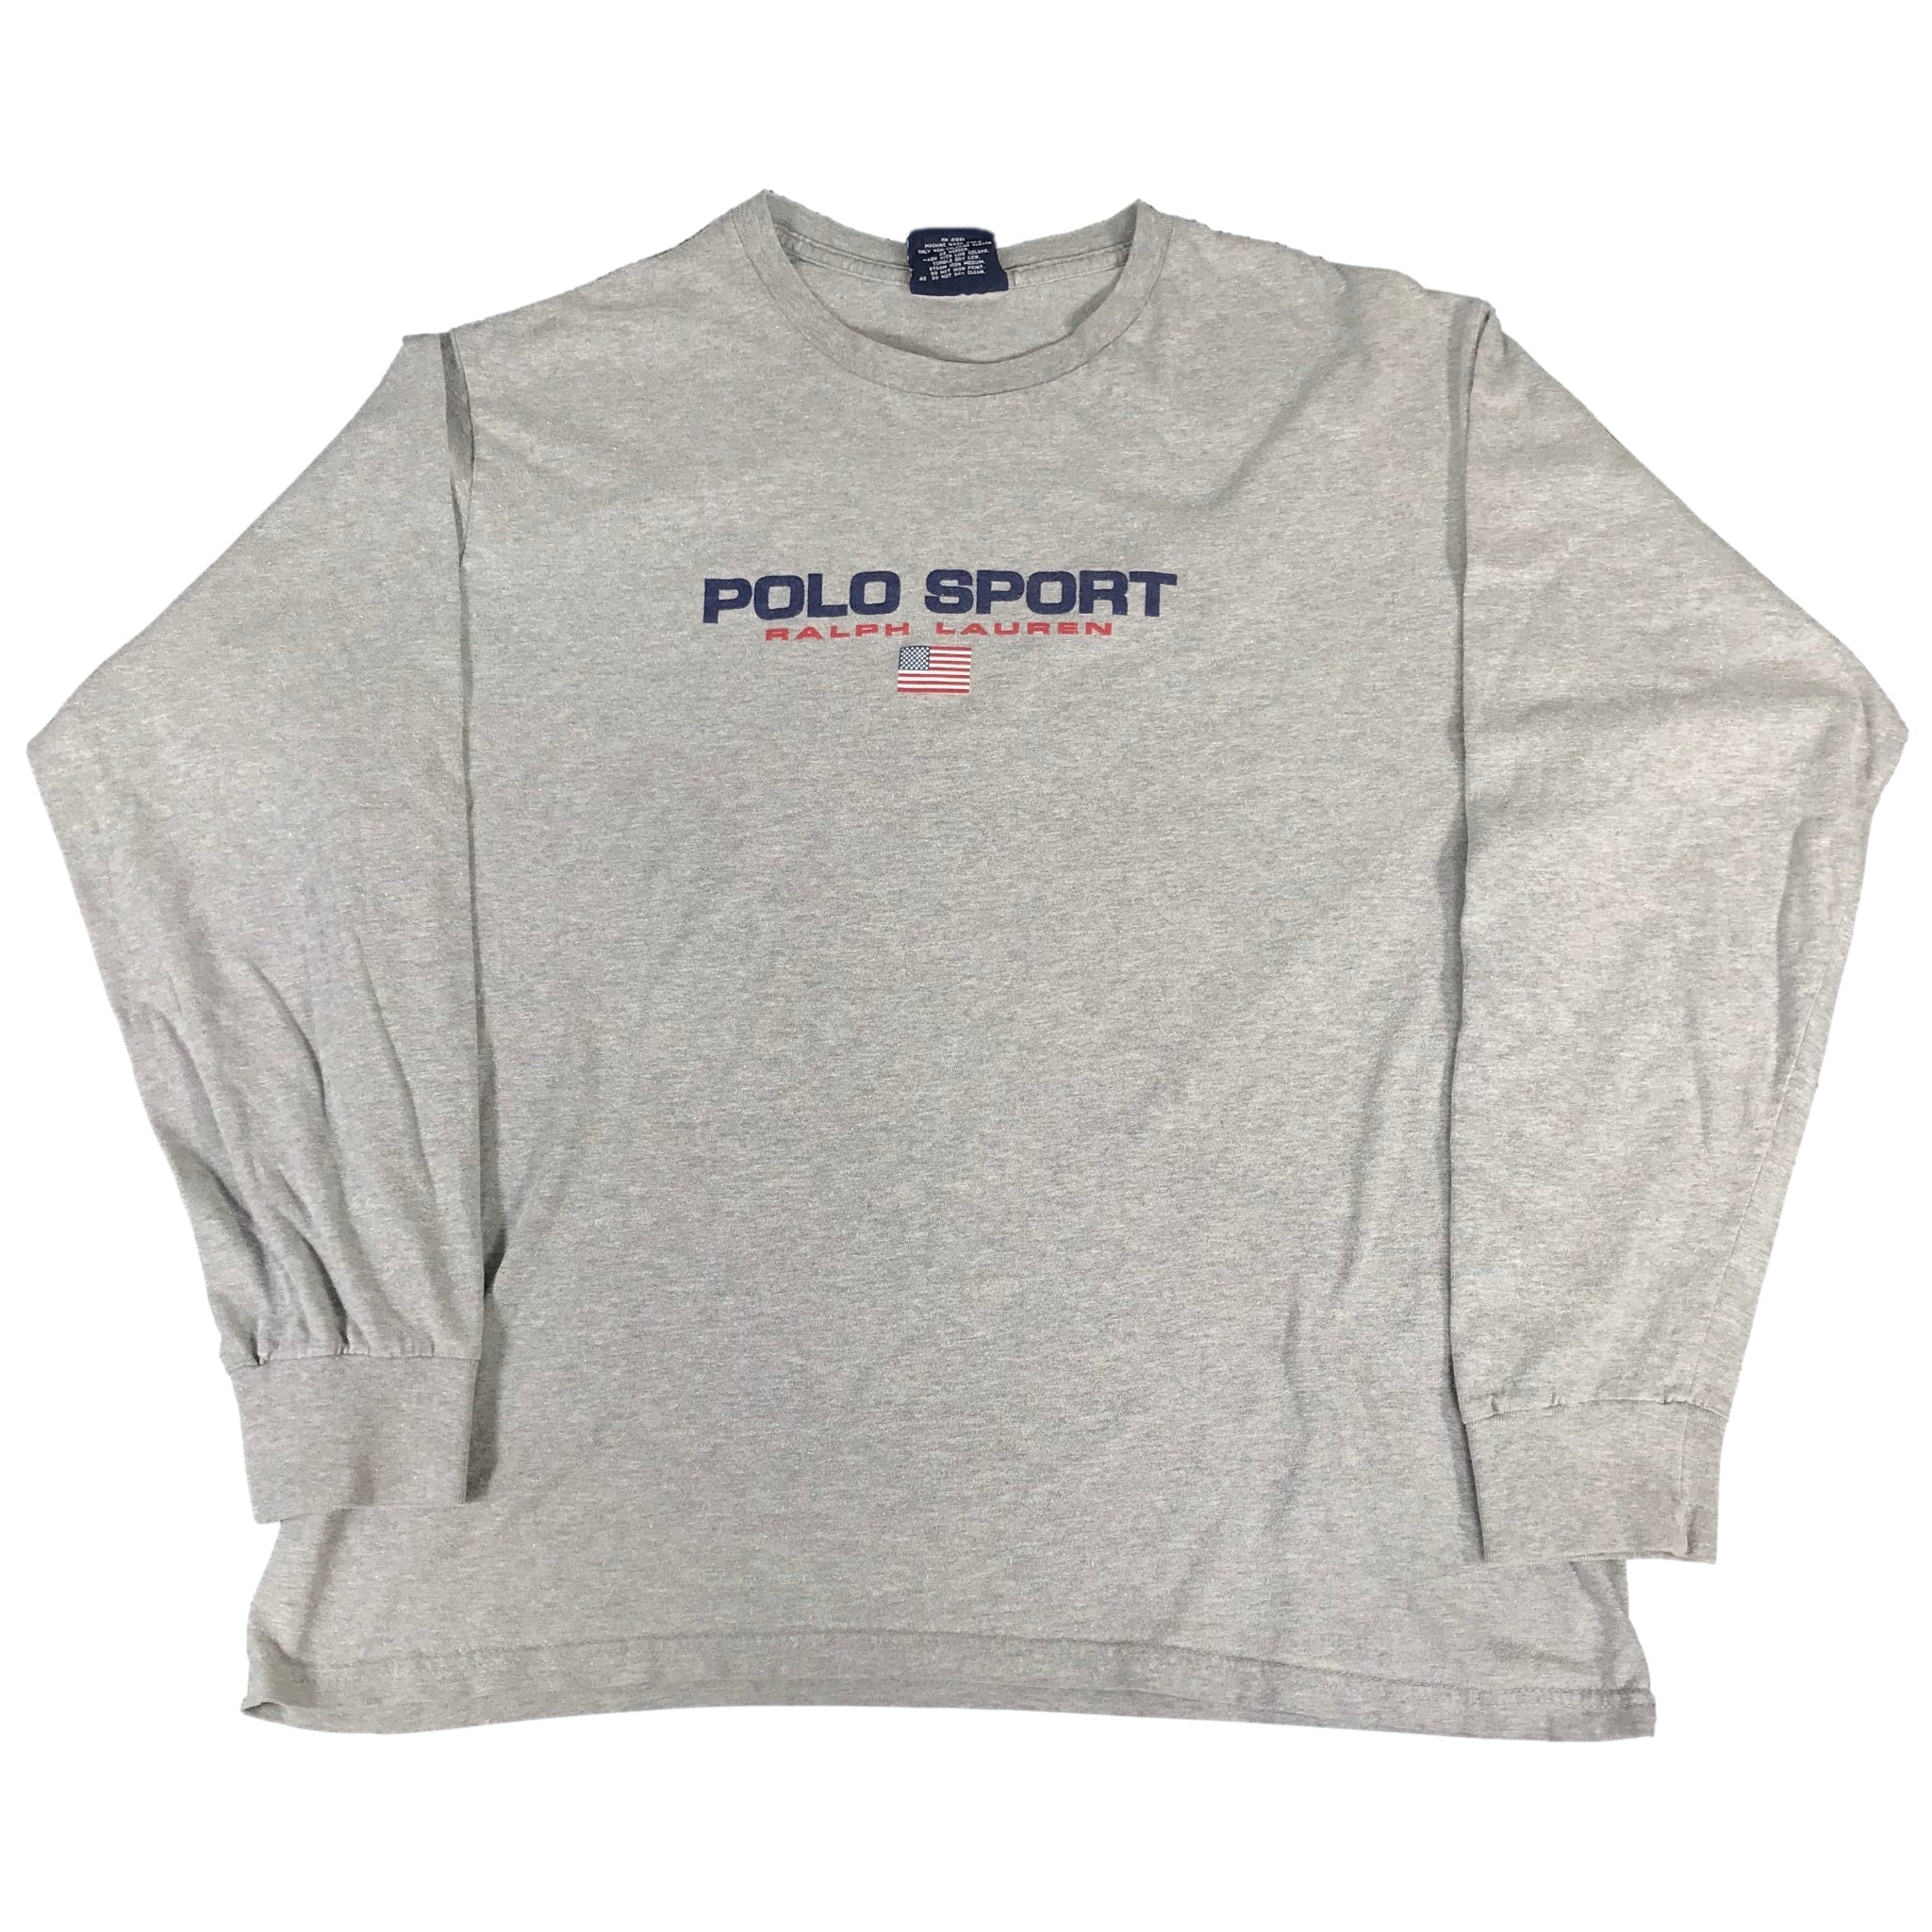 polo sport long sleeve t shirt